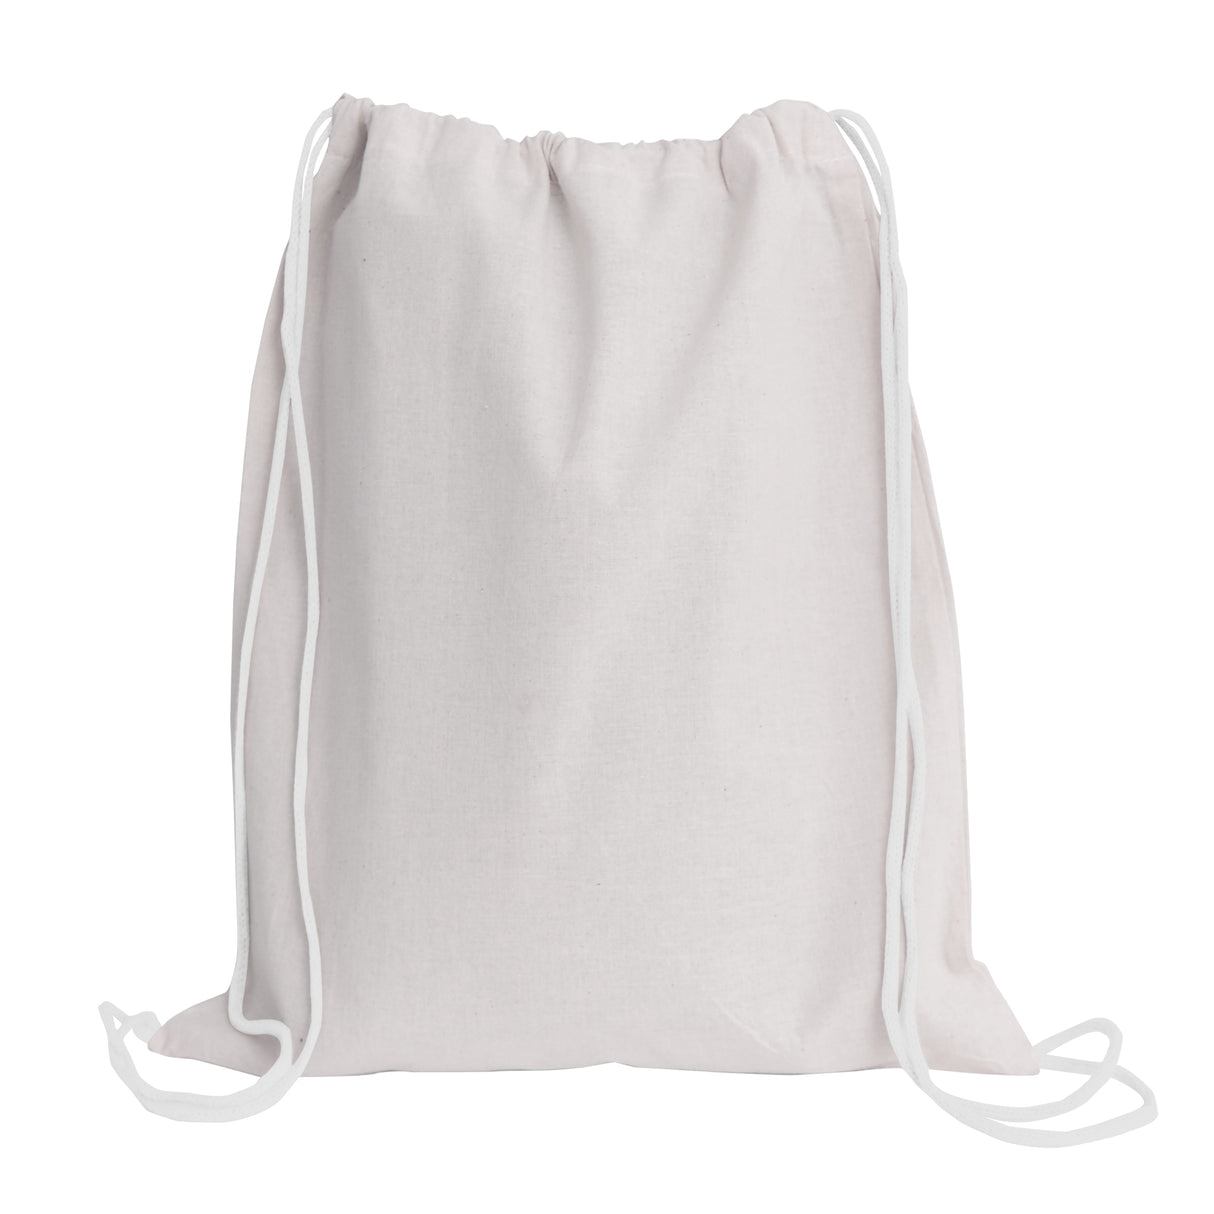 Fair Trade Drawstring Backpack, set of 10pcs – 100% cotton, 1 col